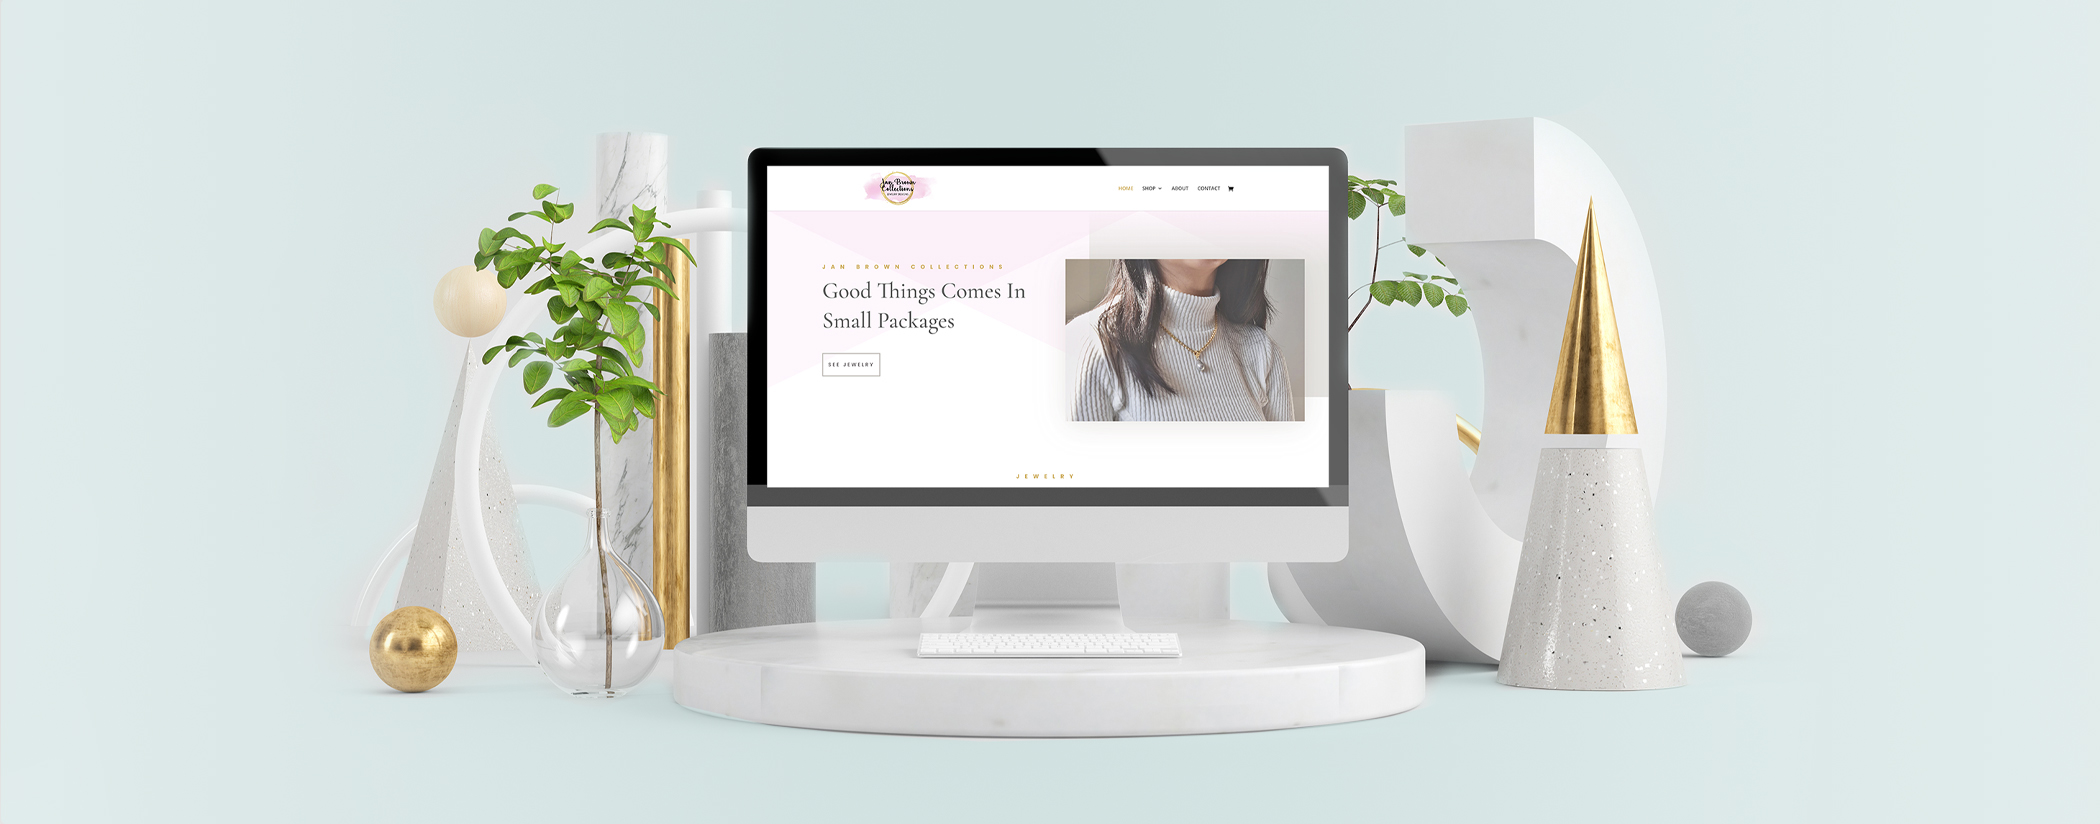 Desktop computer showing beautiful ecommerce website design for Jewelry company